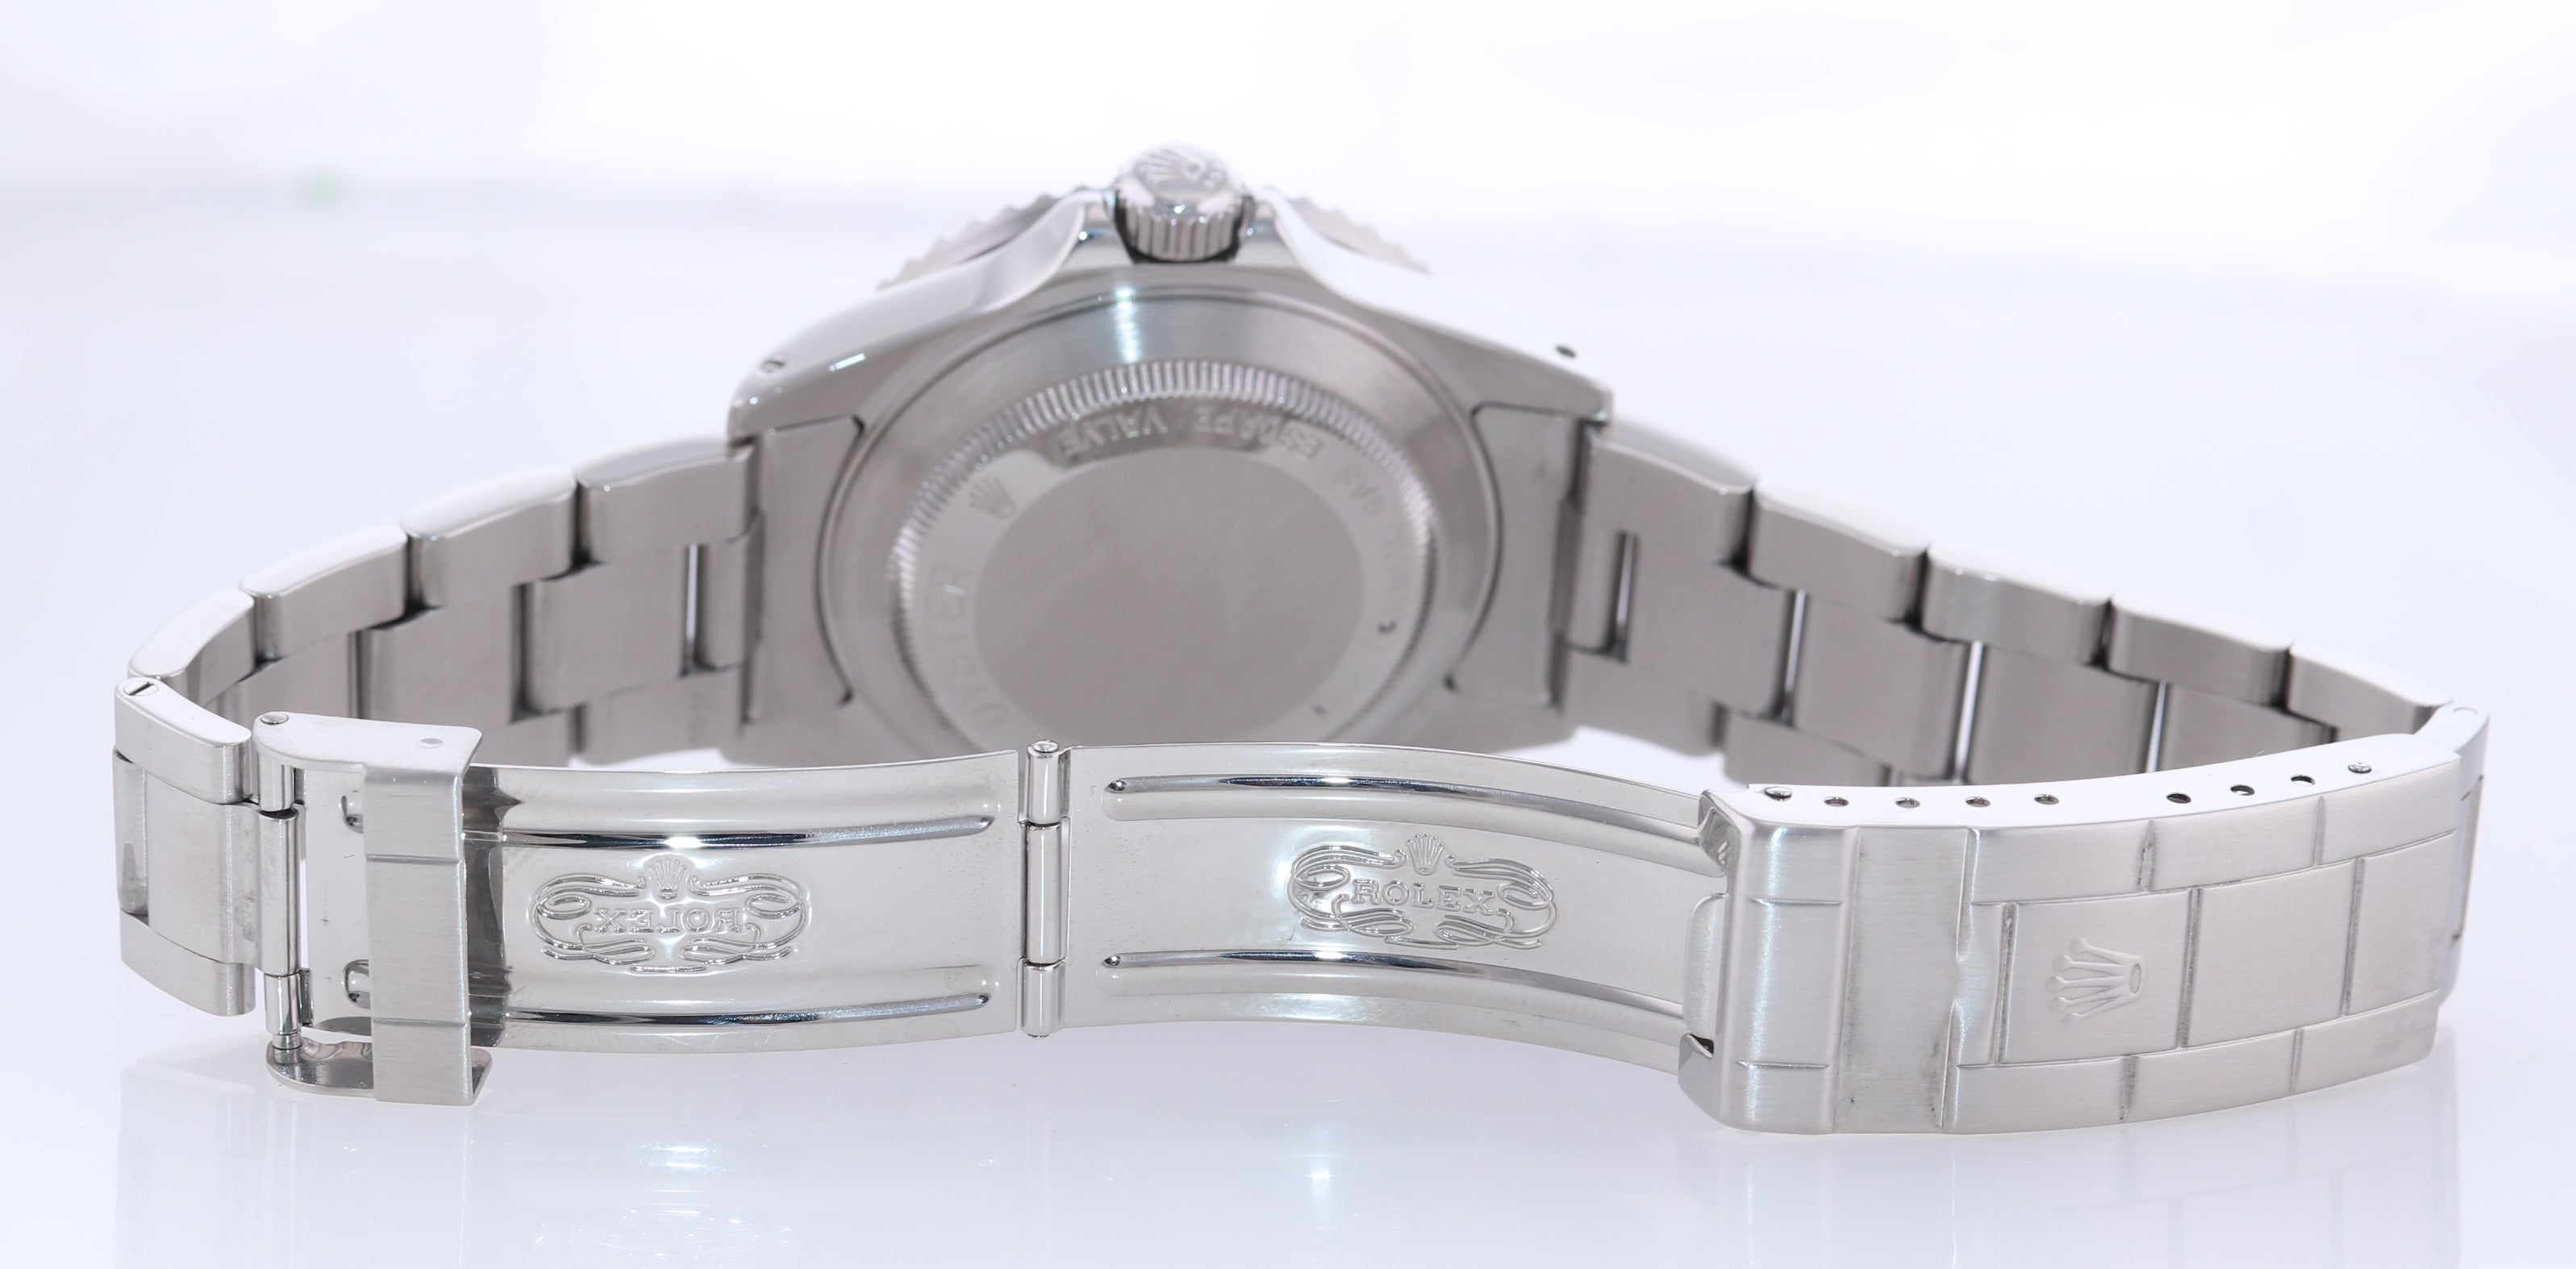 PAPERS Rolex Sea-Dweller Steel Date 16600 40mm Date Black Diver Watch Box